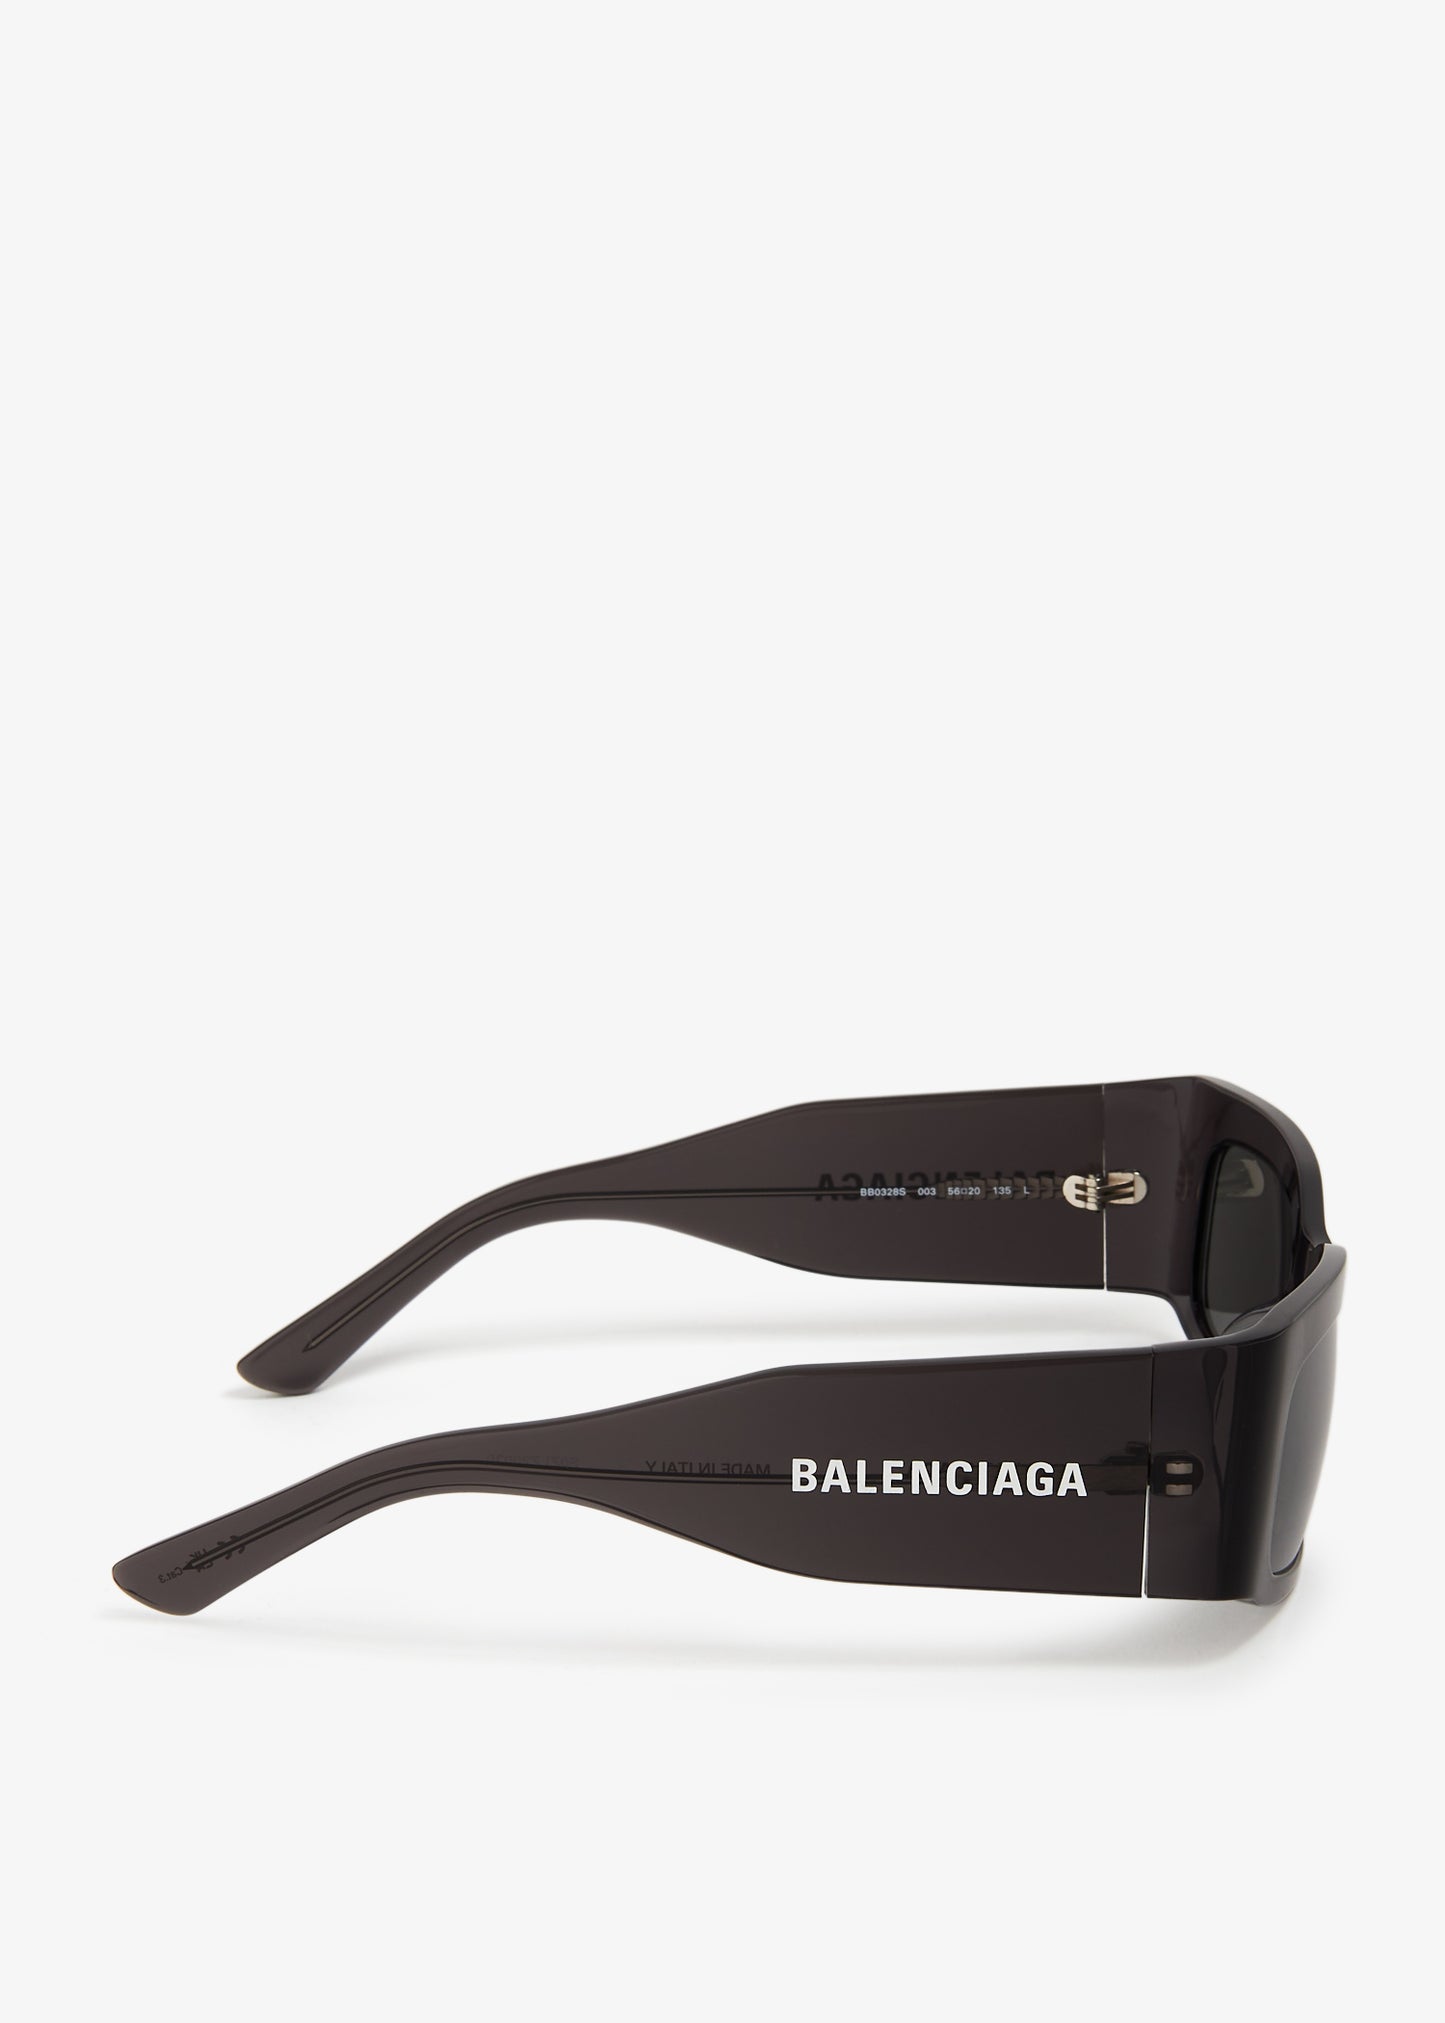 Balenciaga BB0328S-003 56mm New Sunglasses